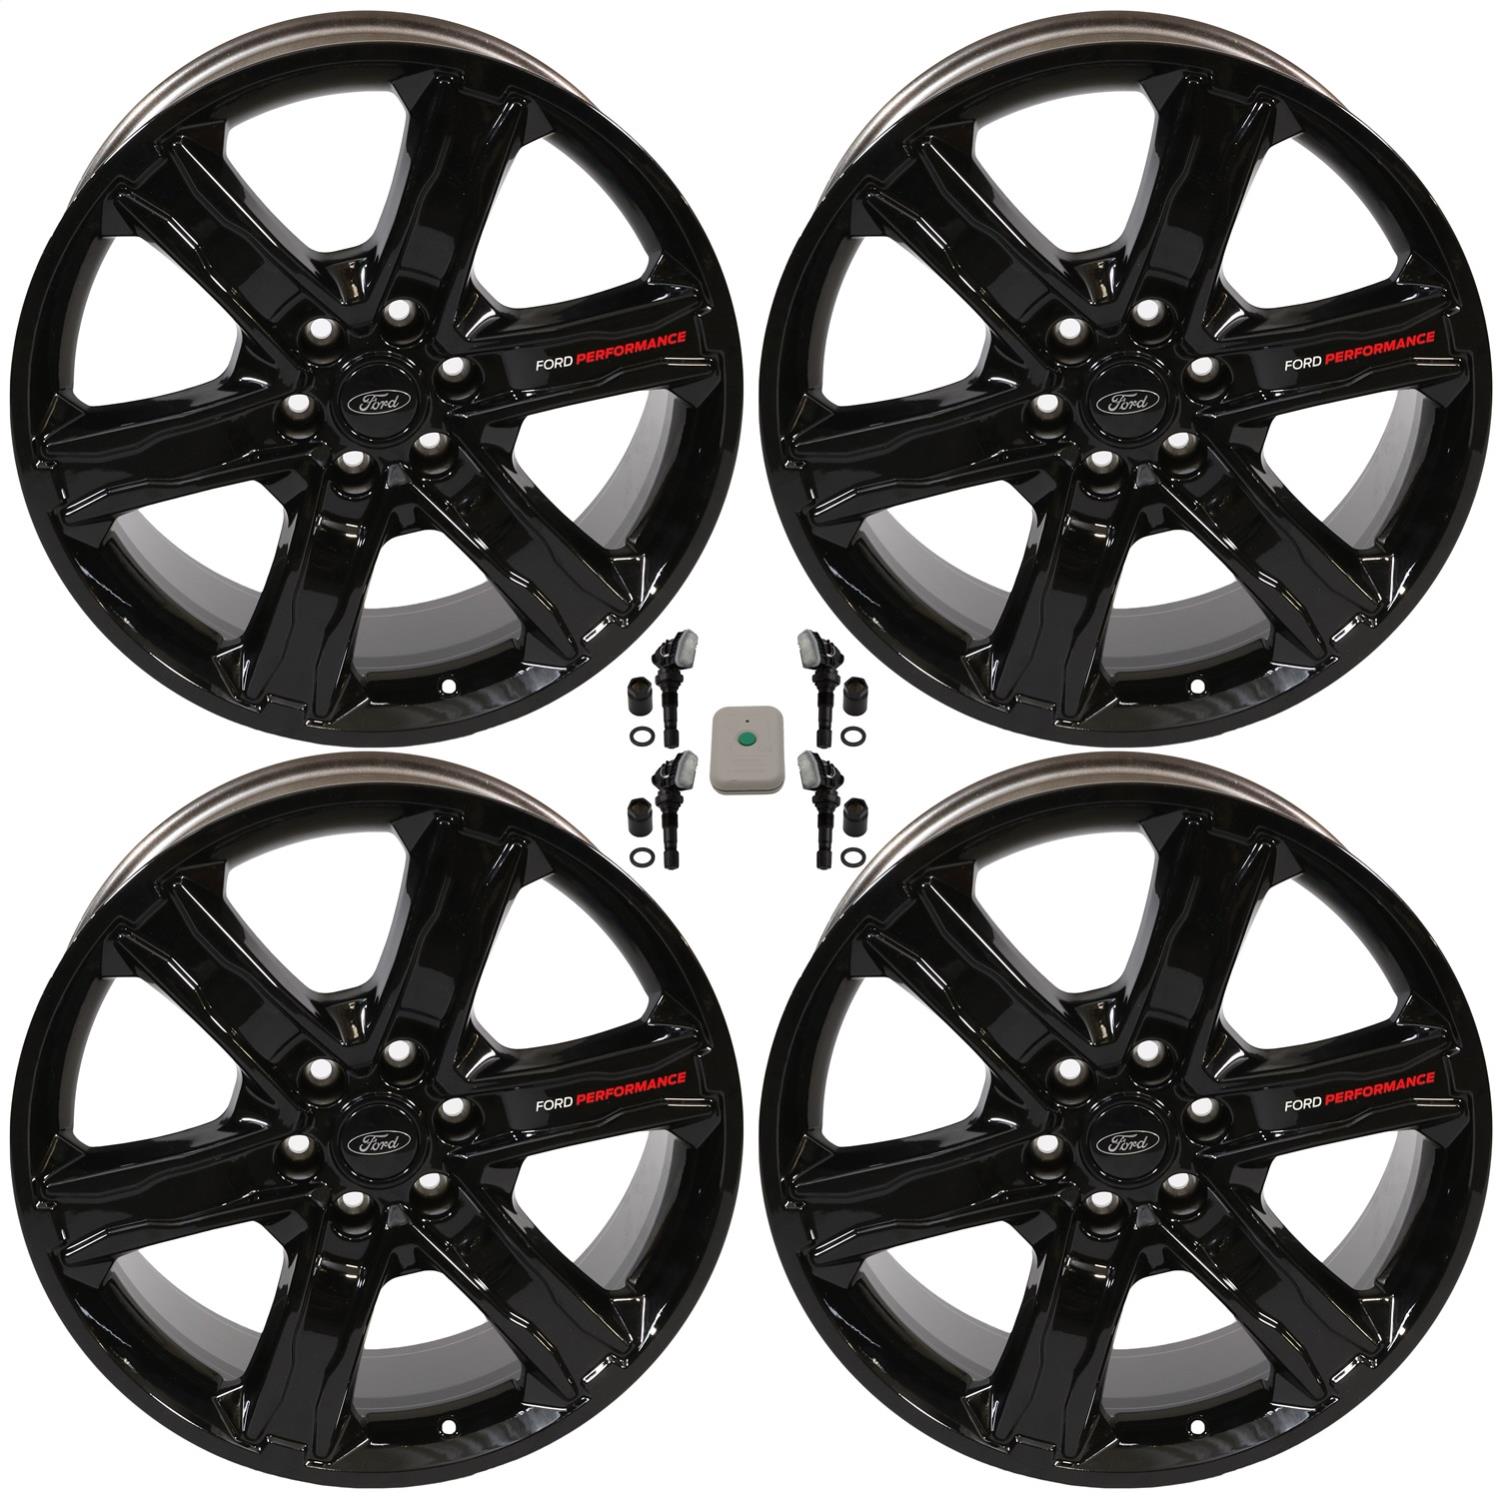 M-1007K-S2295GB Six Spoke Wheel Kit Fits Select Ford